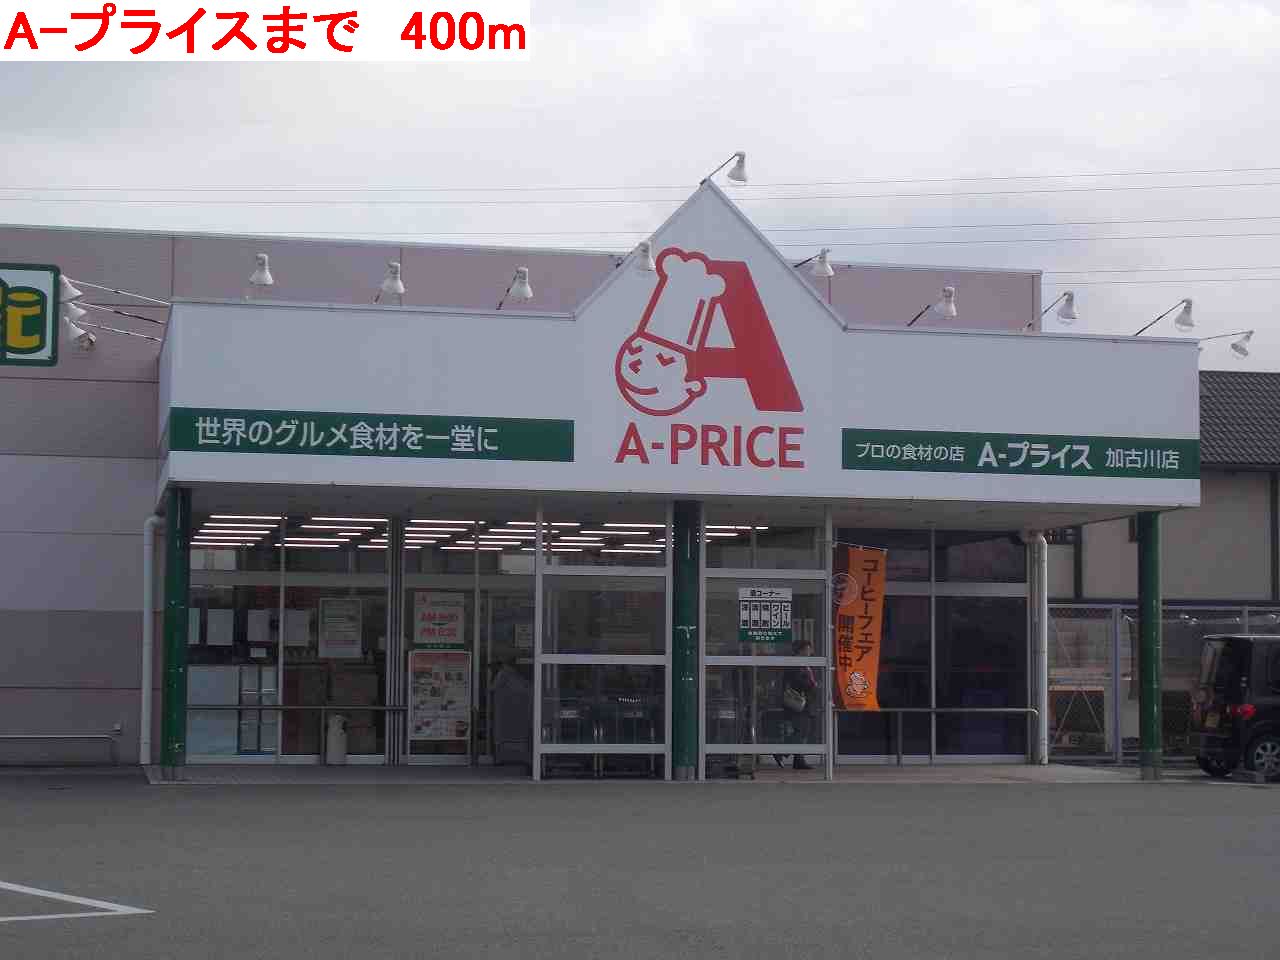 Supermarket. A- 400m until the price (super)